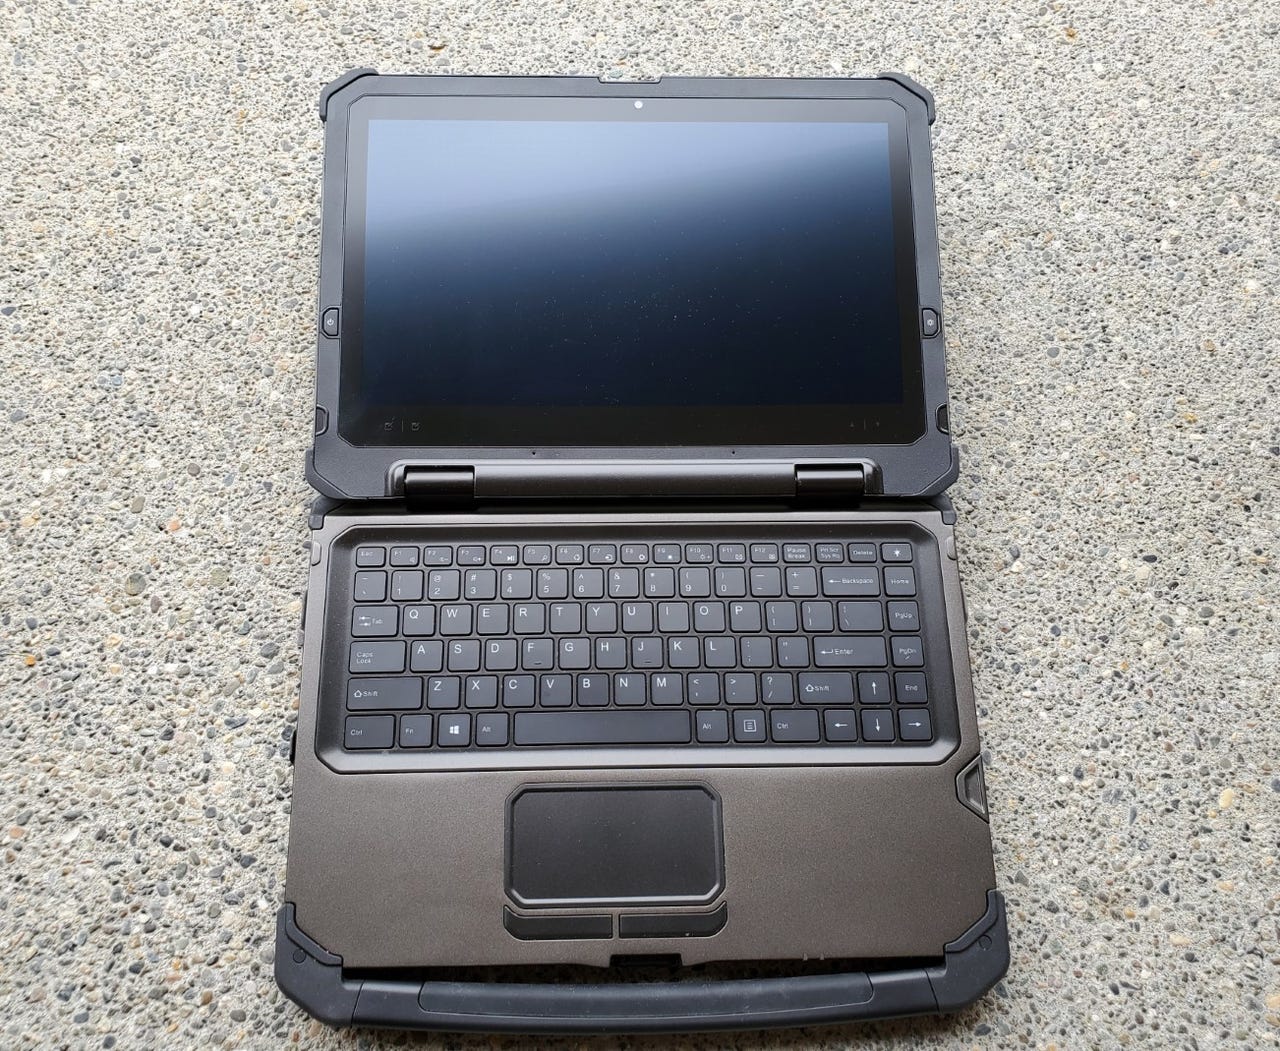 dt-lt330-rugged-laptop-11.jpg